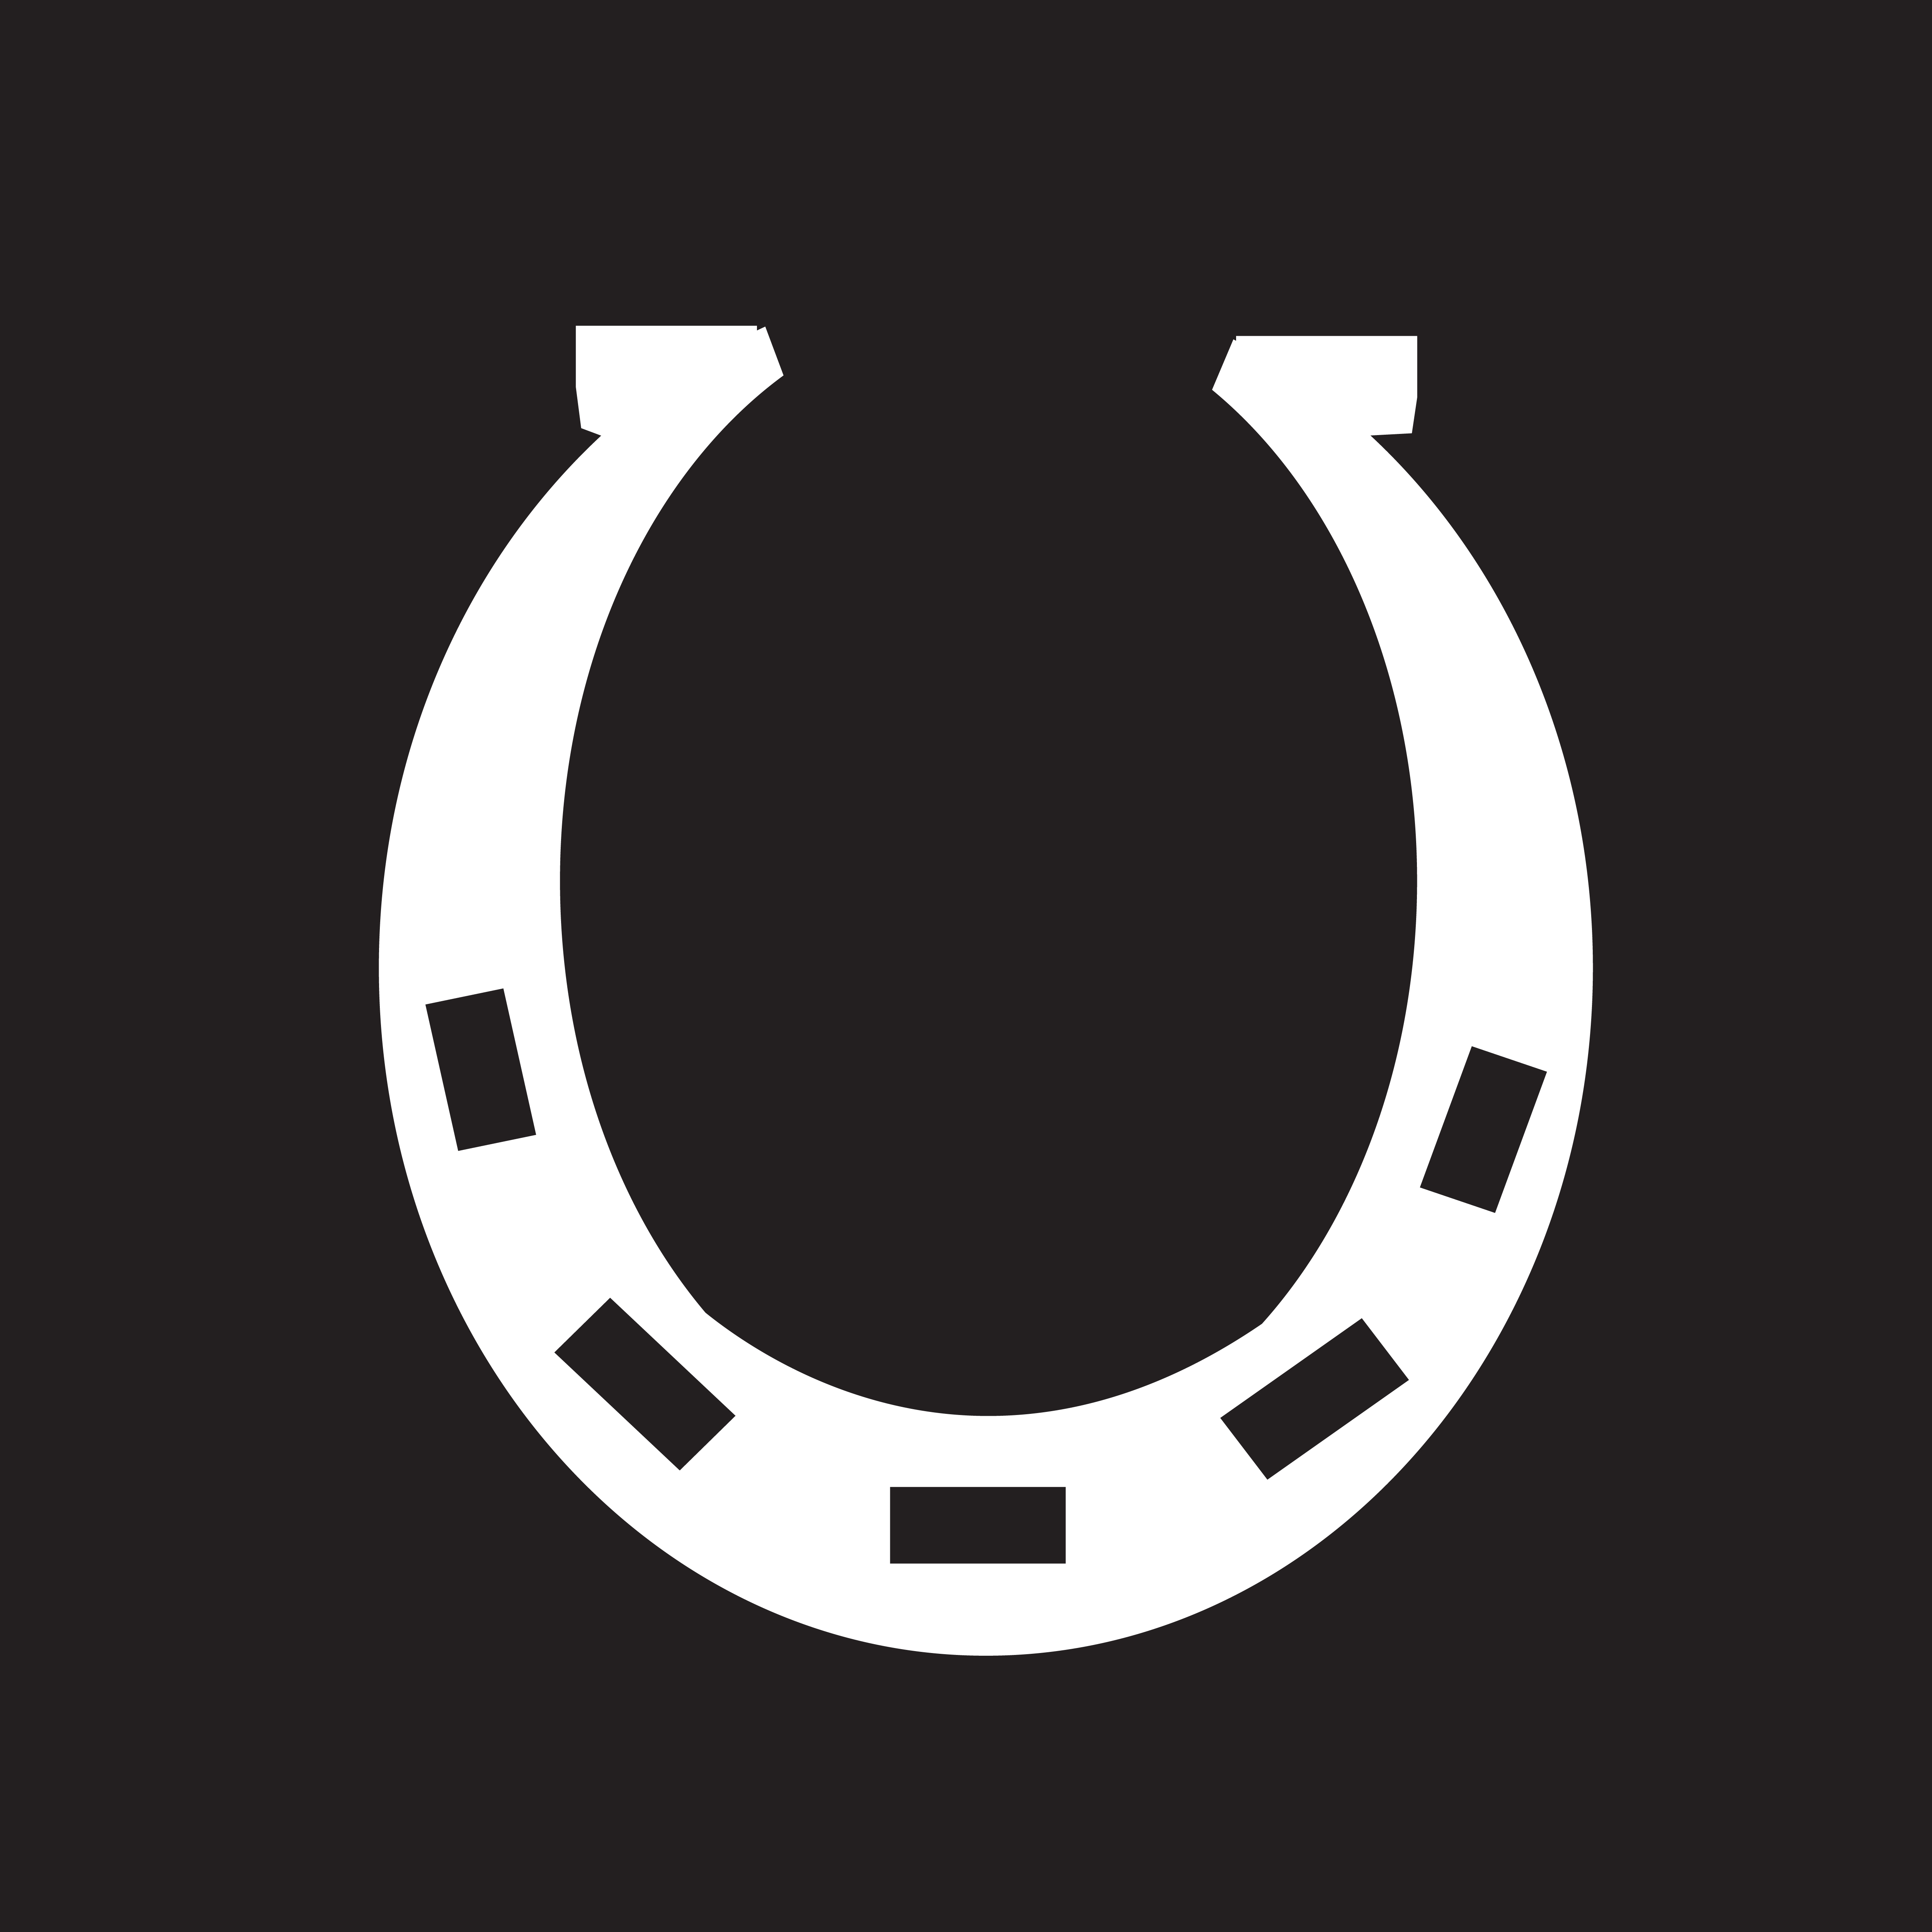 Horseshoe icon symbol sign 649114 - Download Free Vectors, Clipart